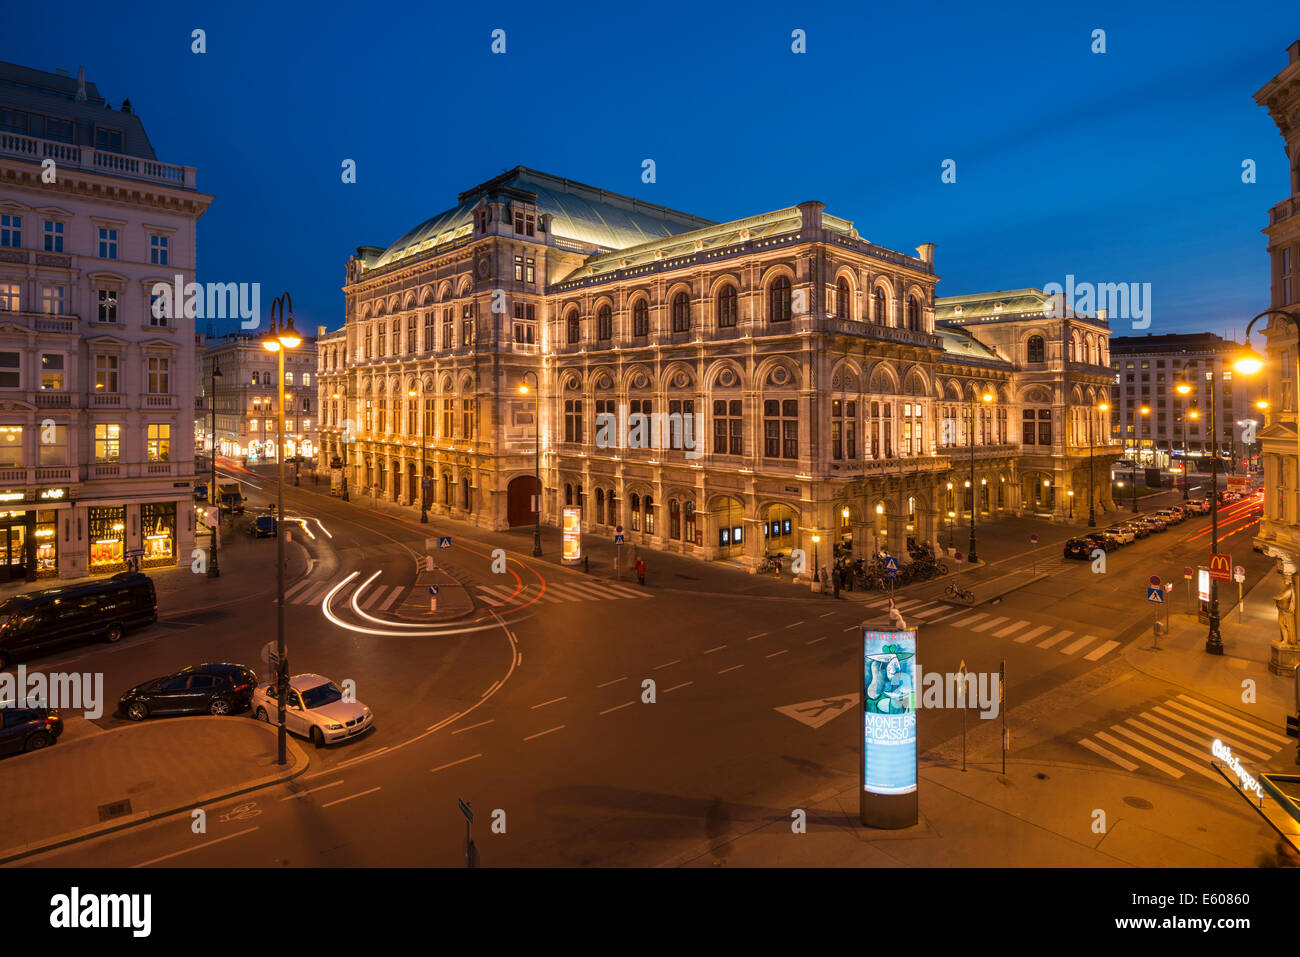 Opera house building at night, Vienna, Austria Stock Photo